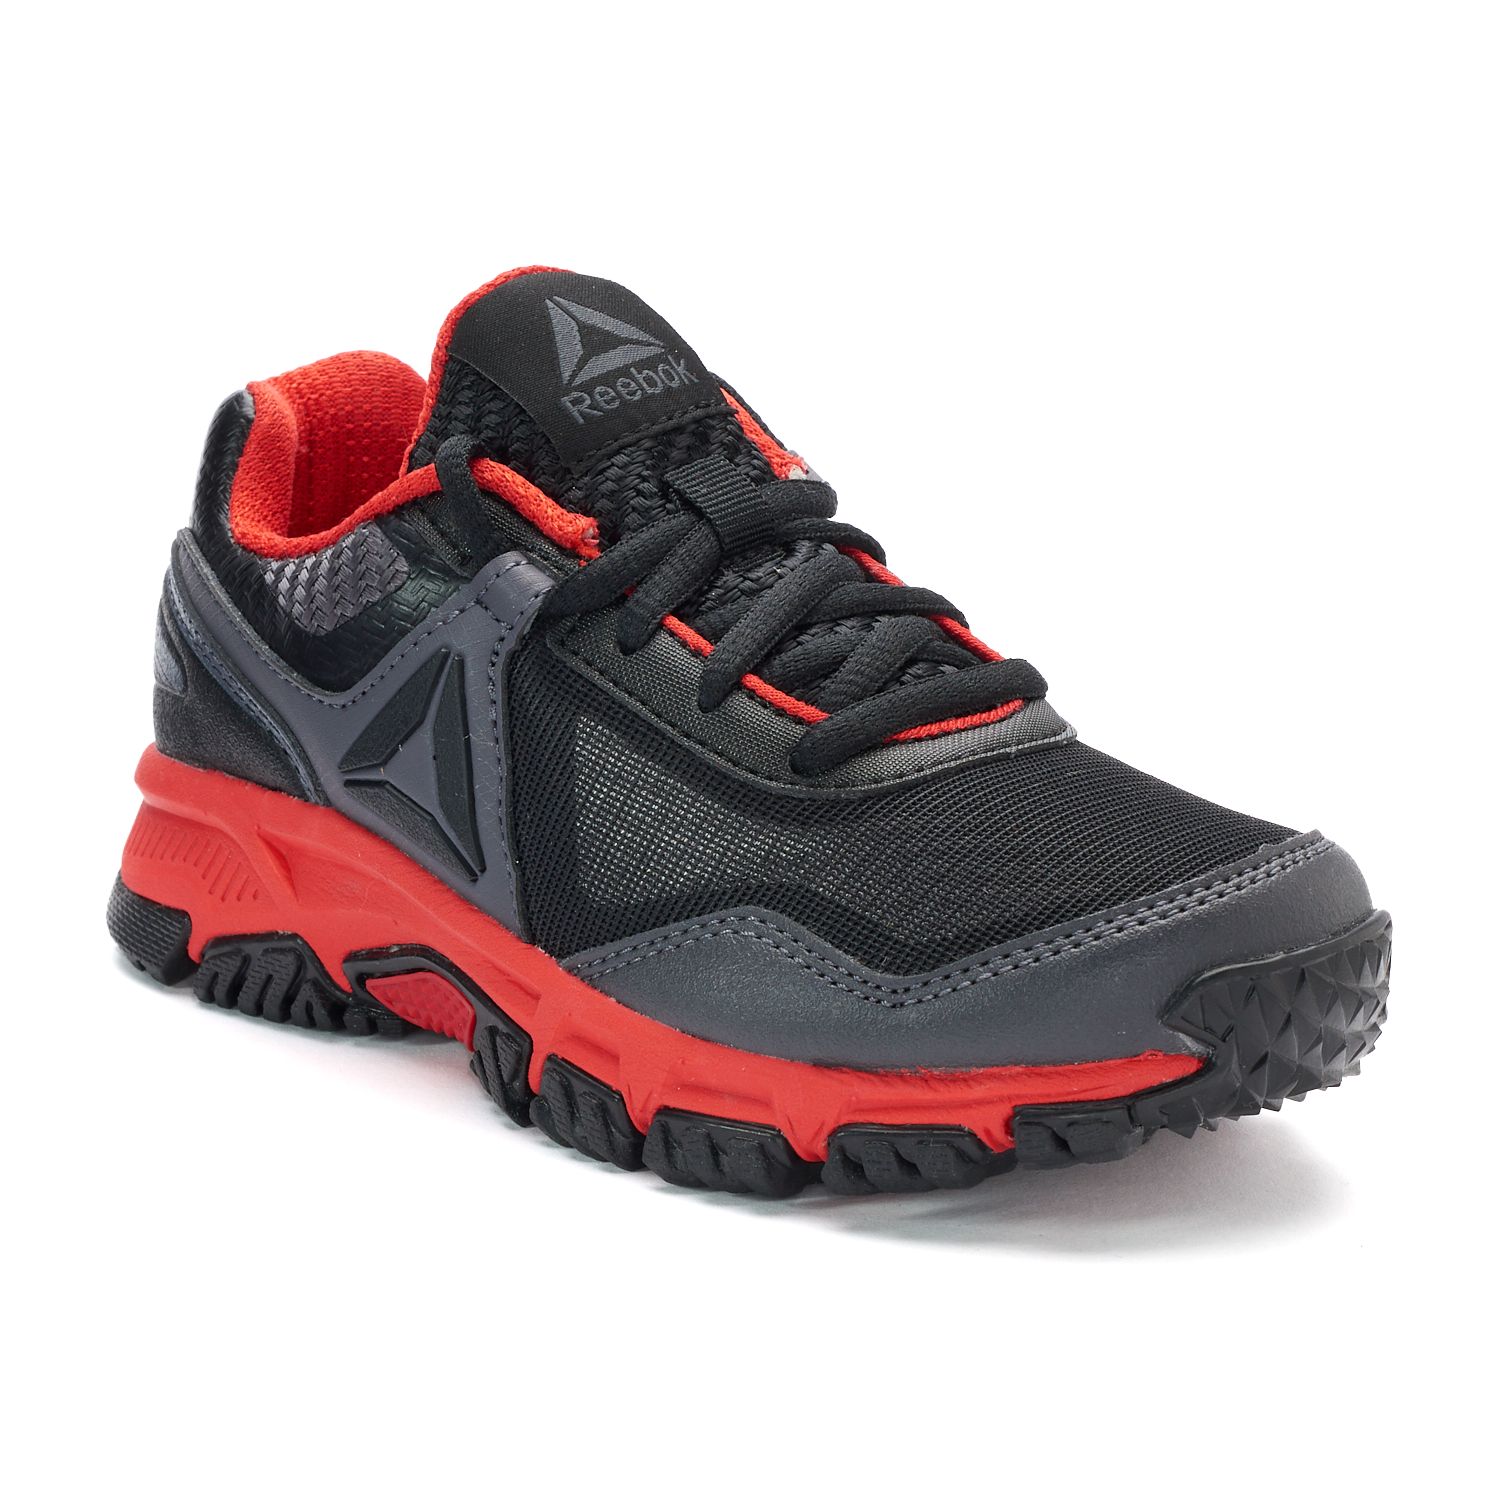 Reebok Ridgerider Trail 3.0 Boys' Sneakers